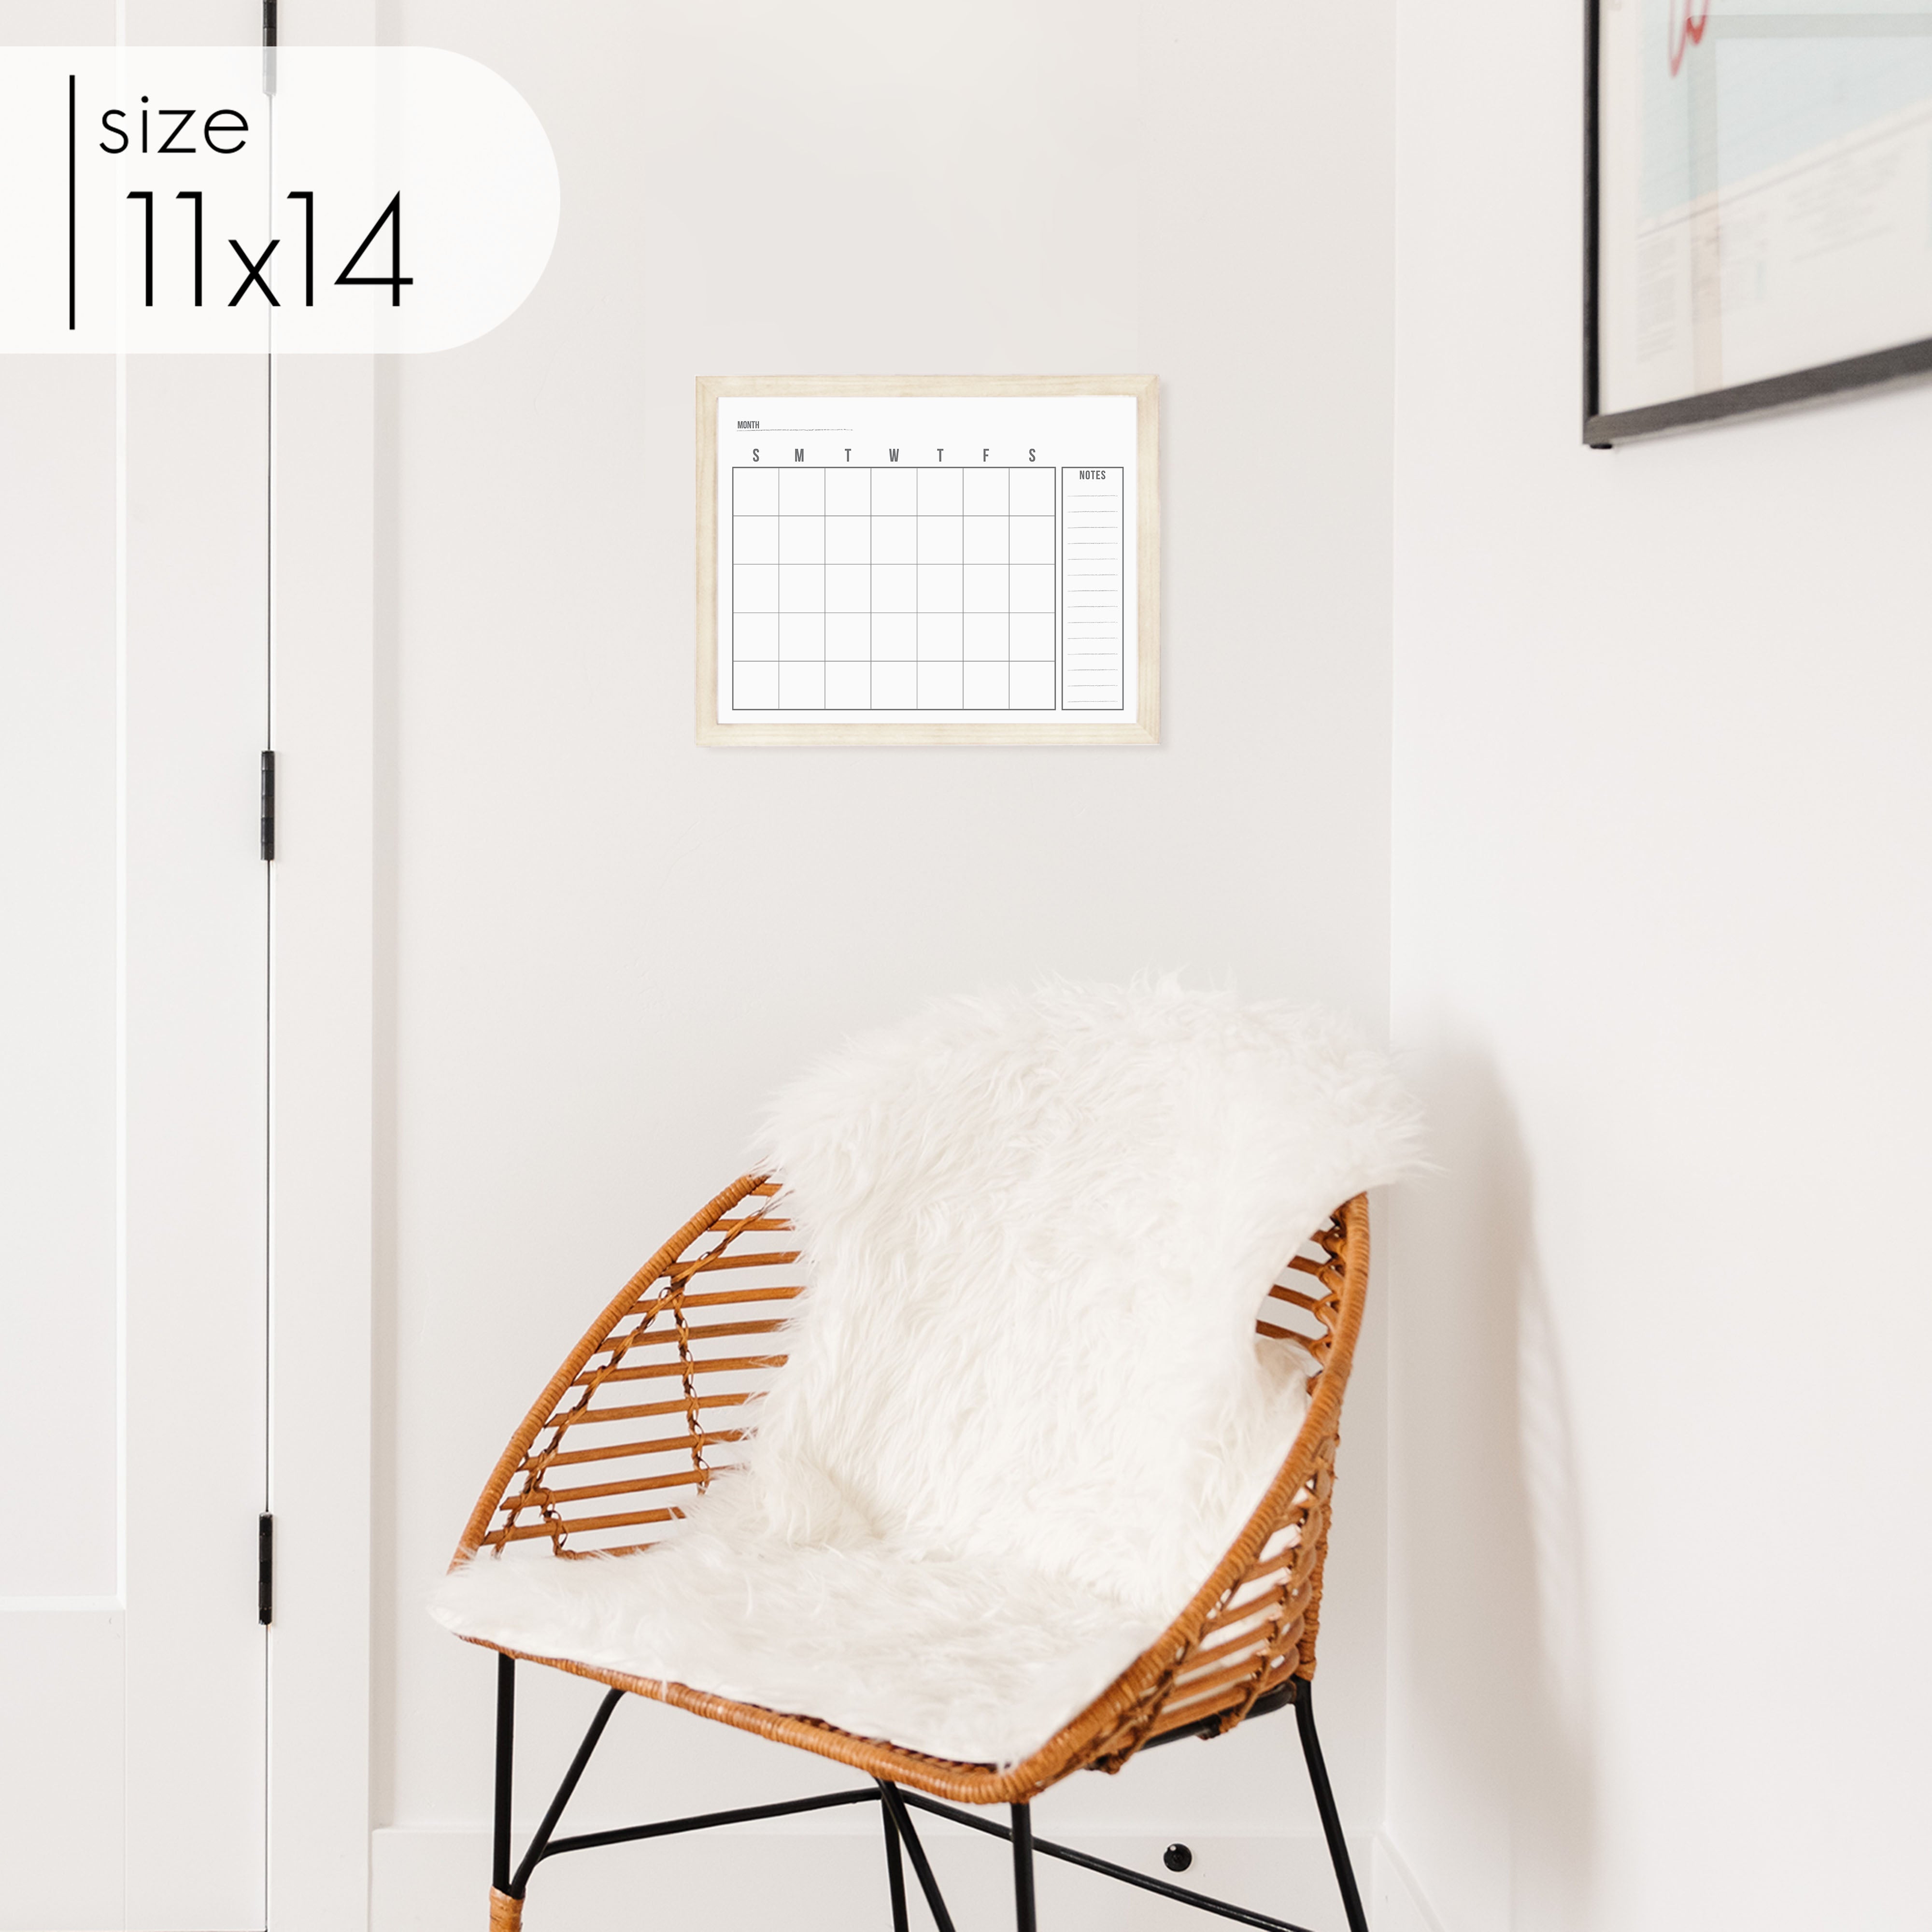 Monthly Framed Whiteboard Calendar + 1 section | Horizontal Dwyer